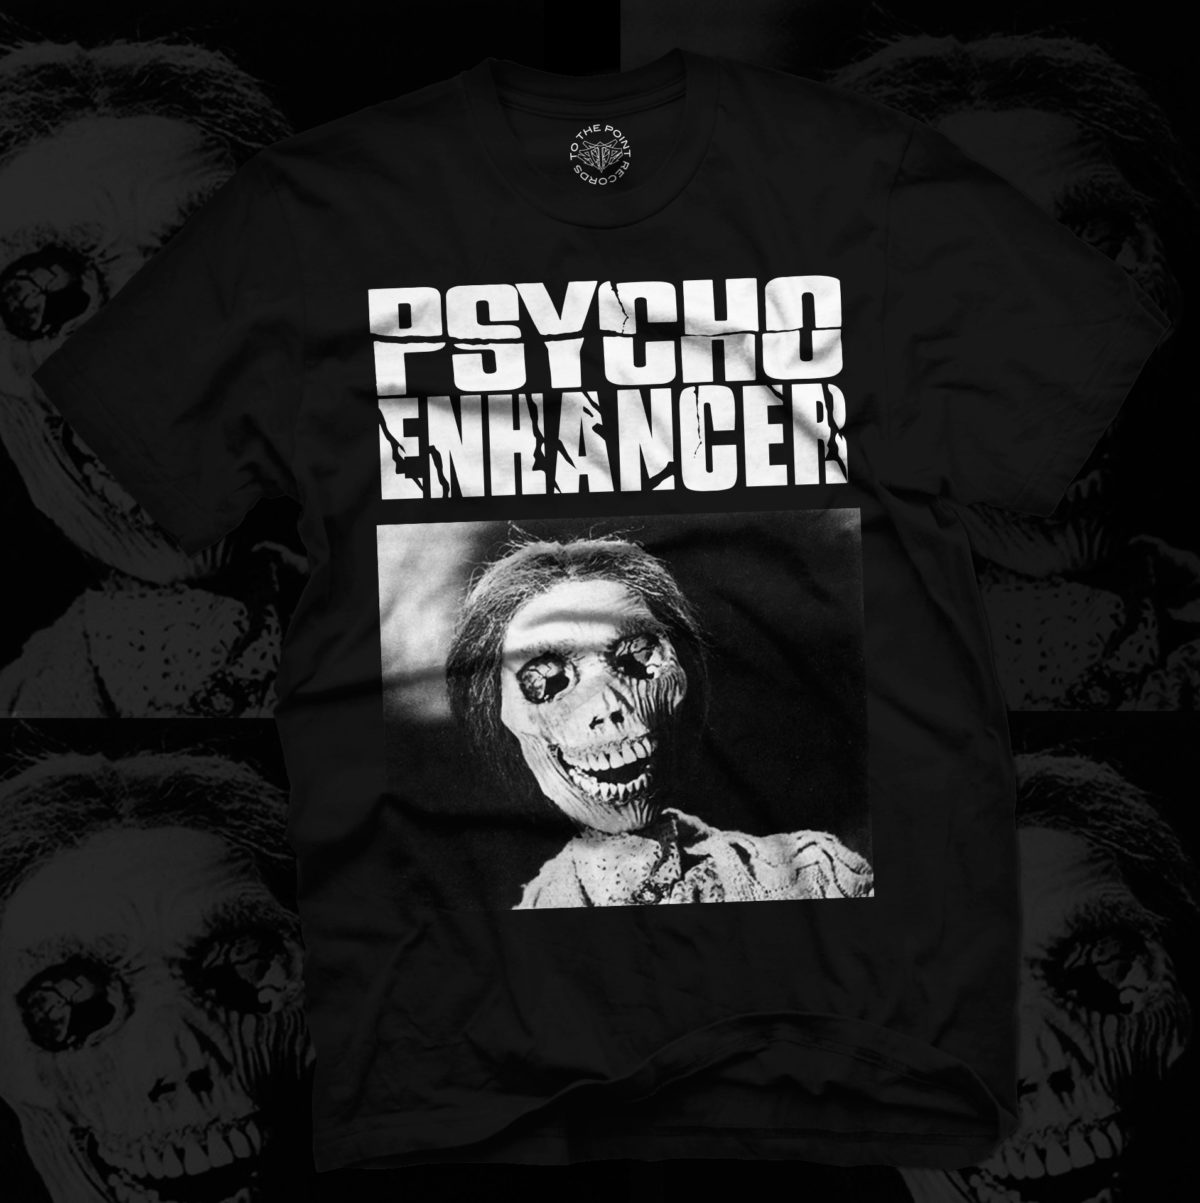 Psycho Enhancer "Normans Mom" Shirt